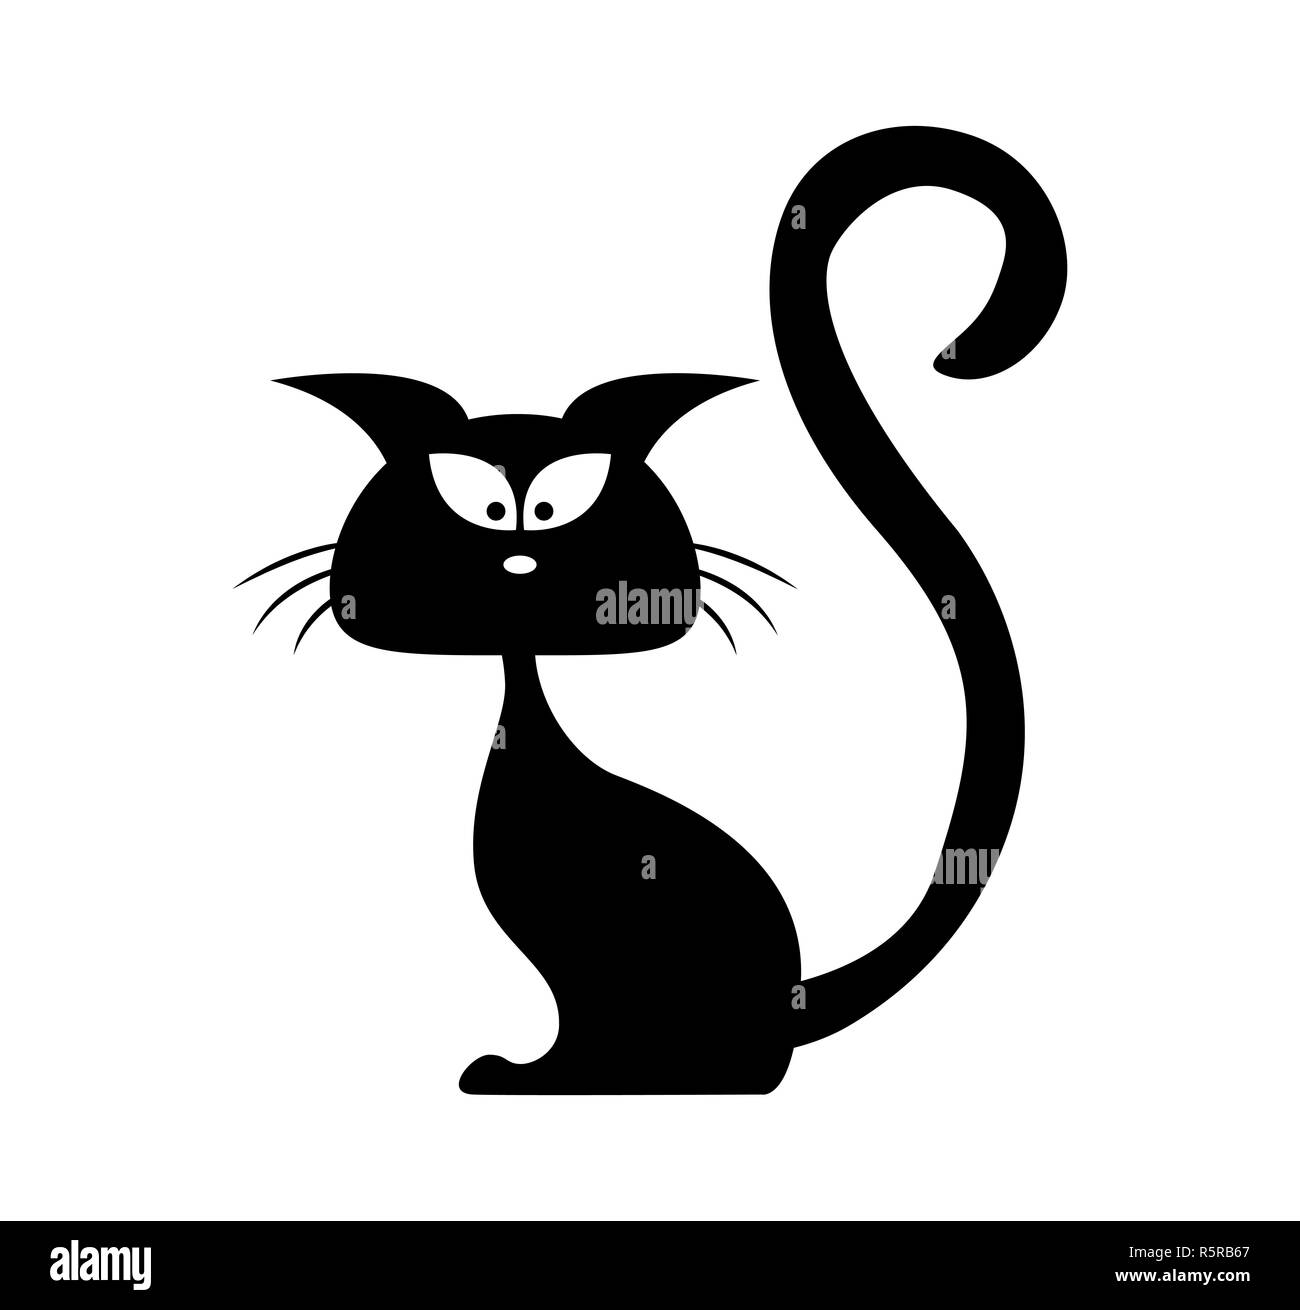 Cat Element Vector Art PNG, Black Cat Element Icon, Cat Icons, Black Icons,  Element Icons PNG Image For Free Download